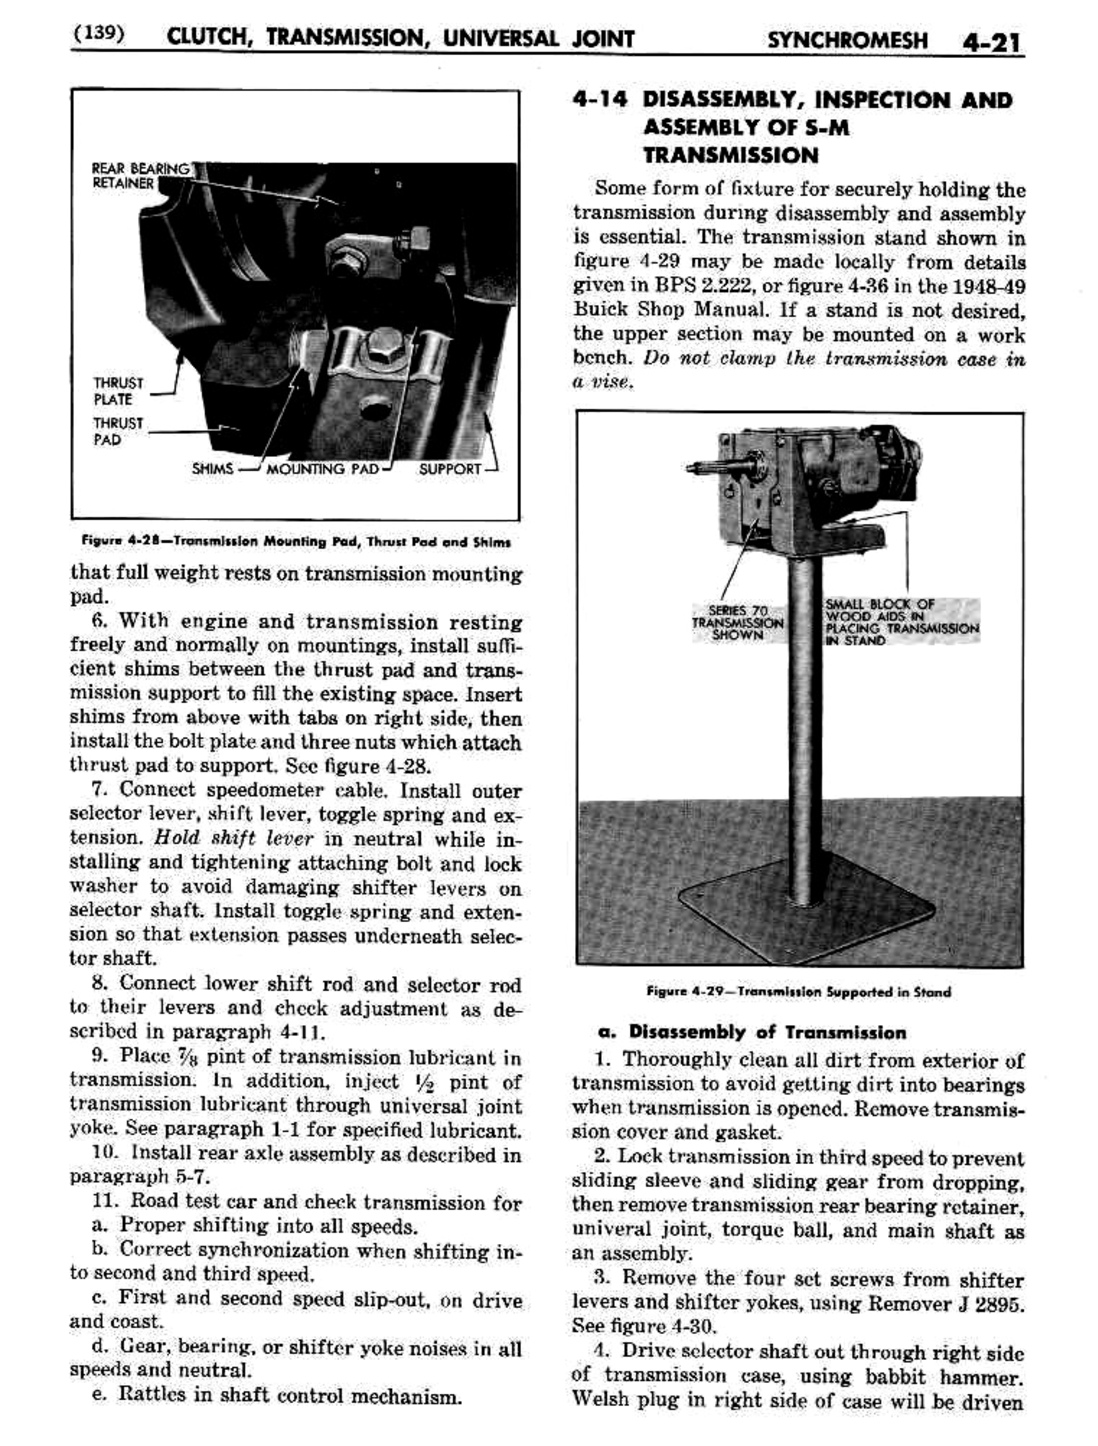 n_05 1951 Buick Shop Manual - Transmission-021-021.jpg